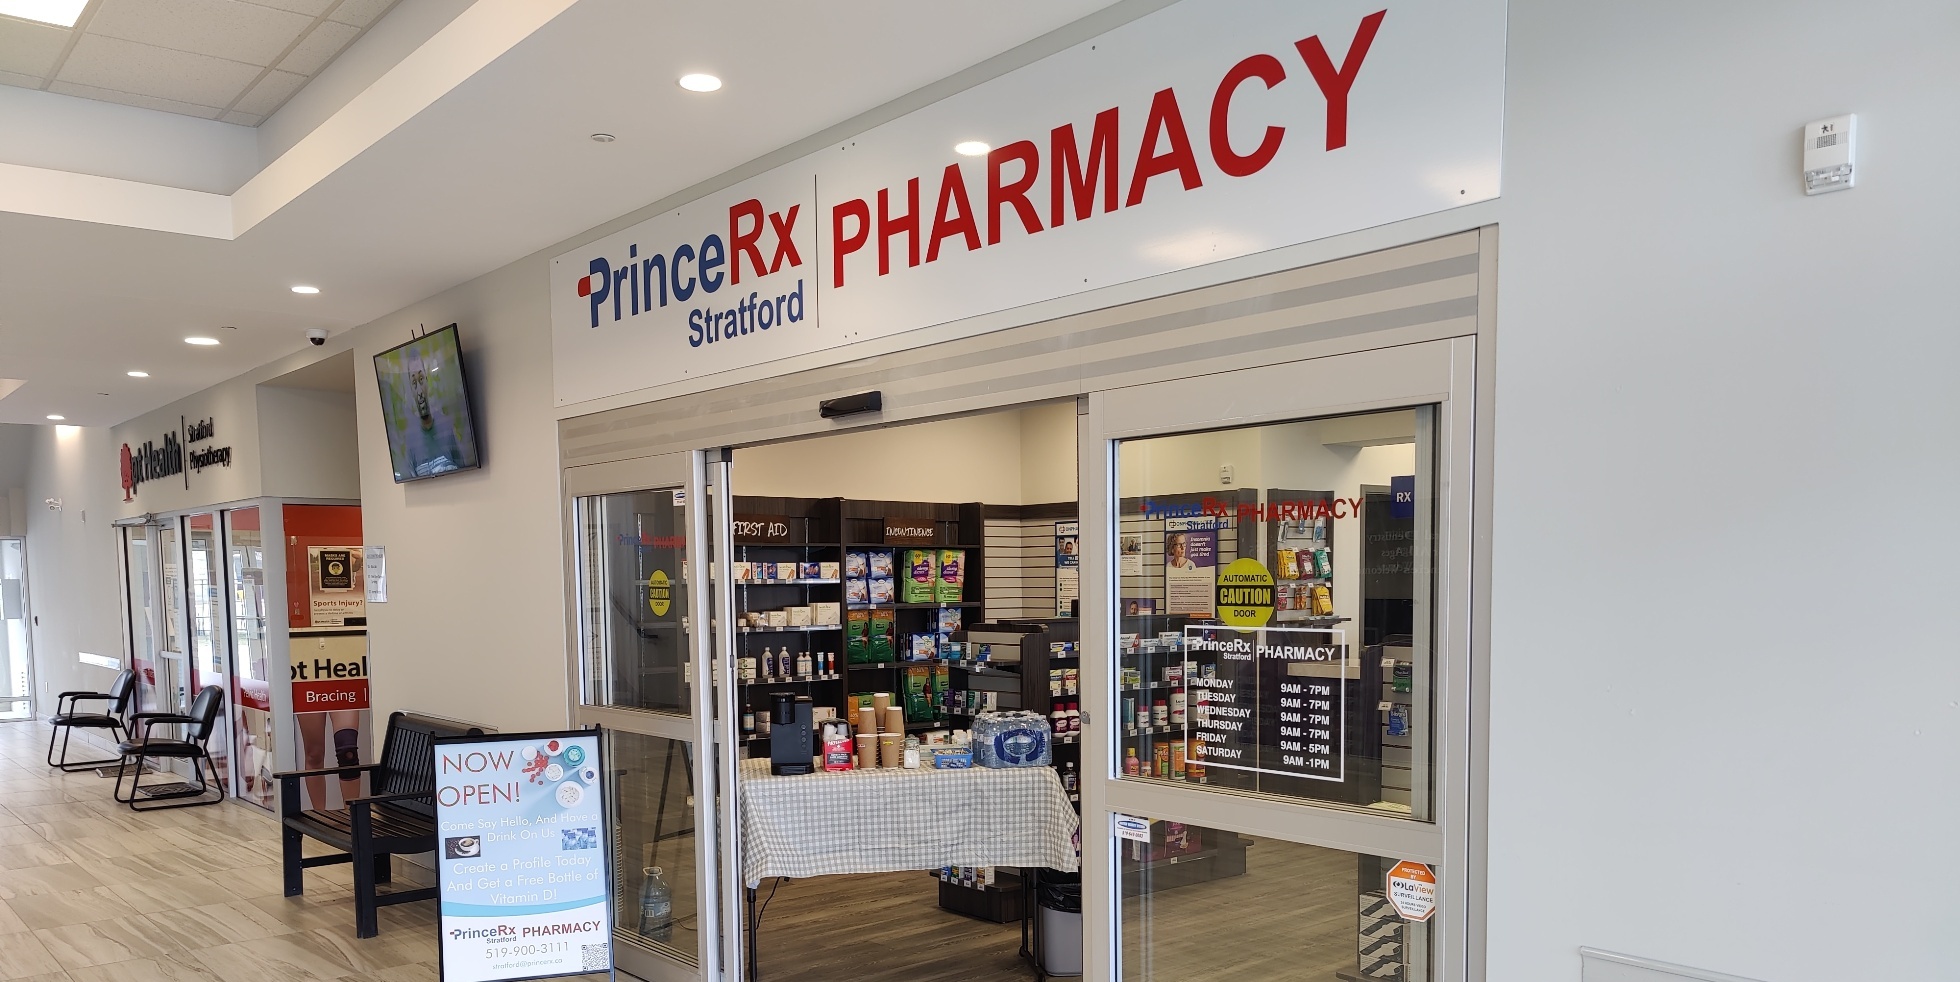 Stratford Pharmacy | PrinceRx